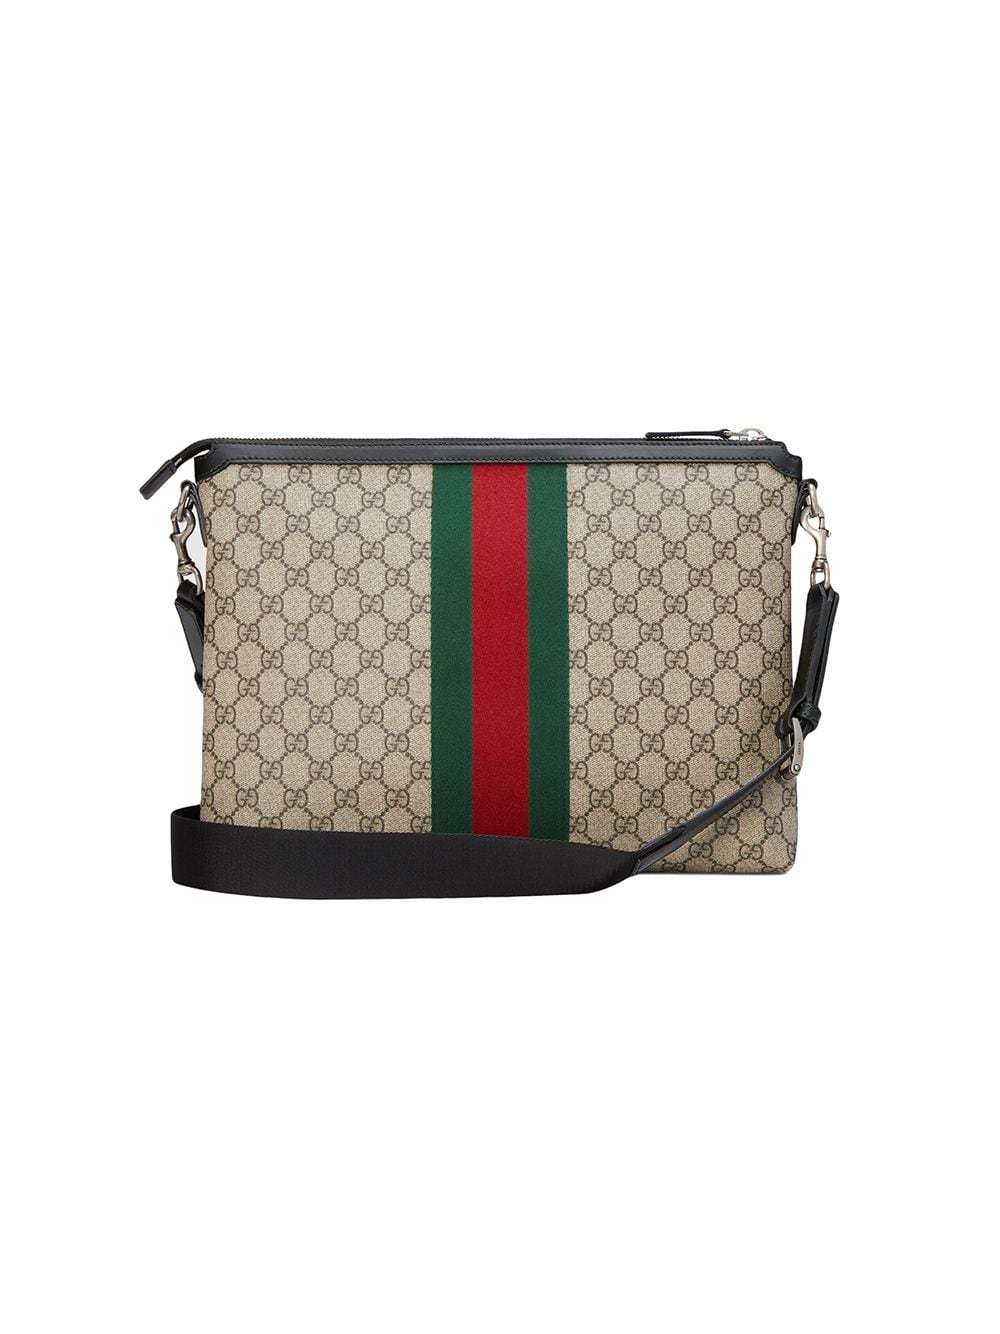 Gucci Gg Supreme Medium Messenger Bag 